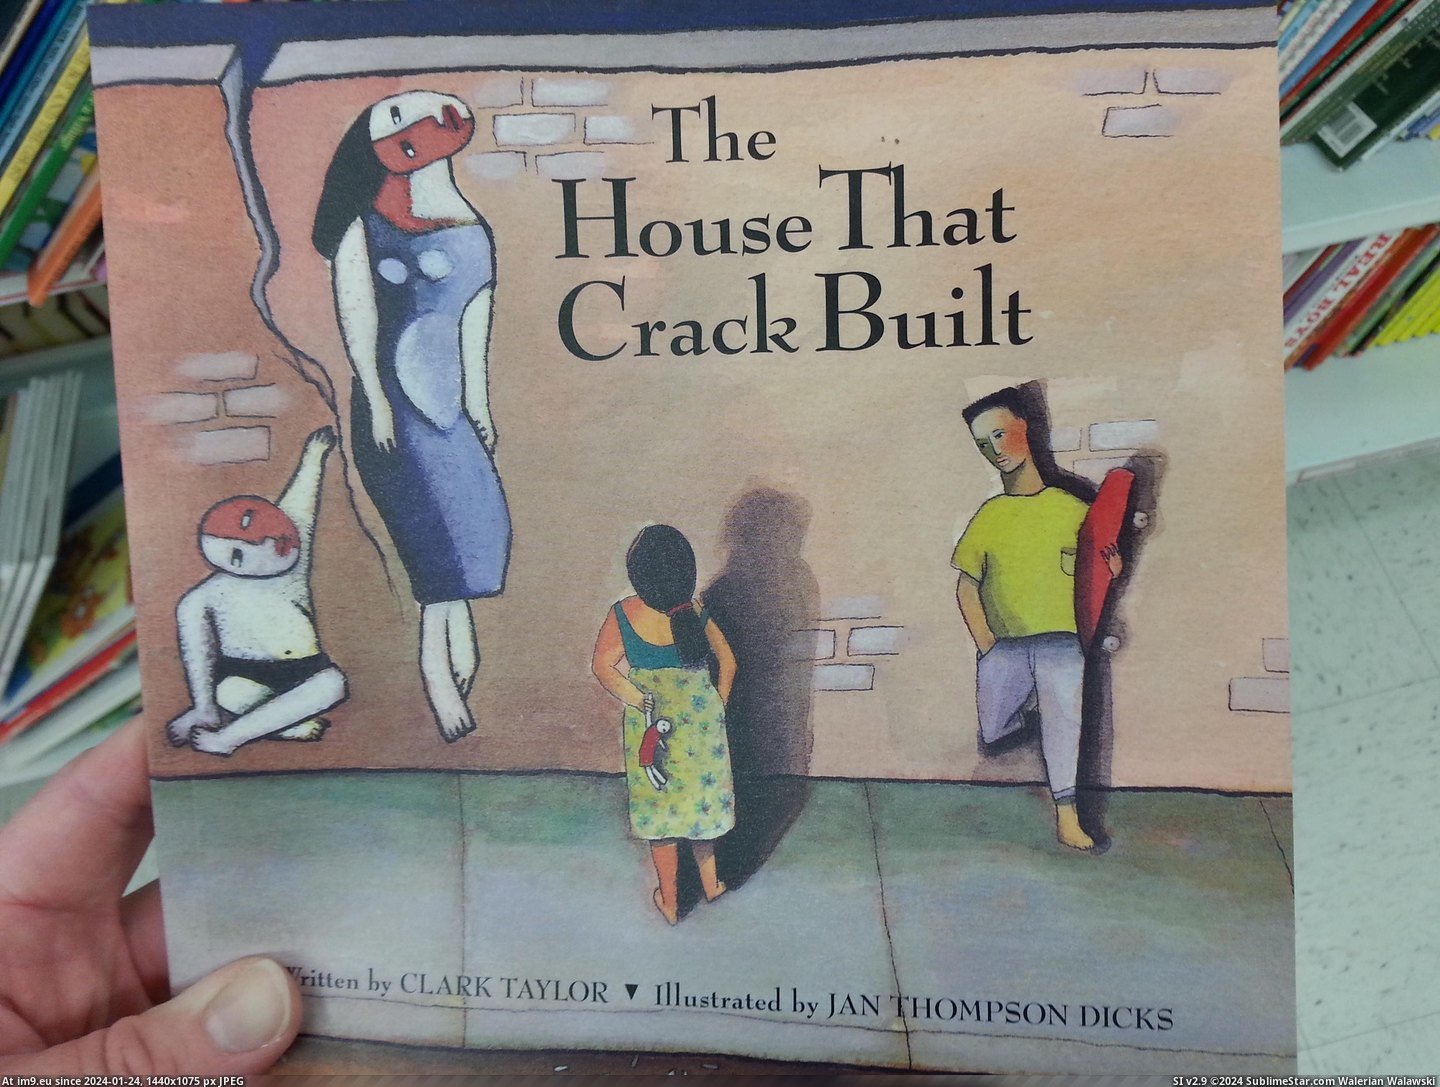 #Wtf #Store #Thrift #Crack #Book #Children [Wtf] Found this children's book about crack at a thrift store today 4 Pic. (Изображение из альбом My r/WTF favs))